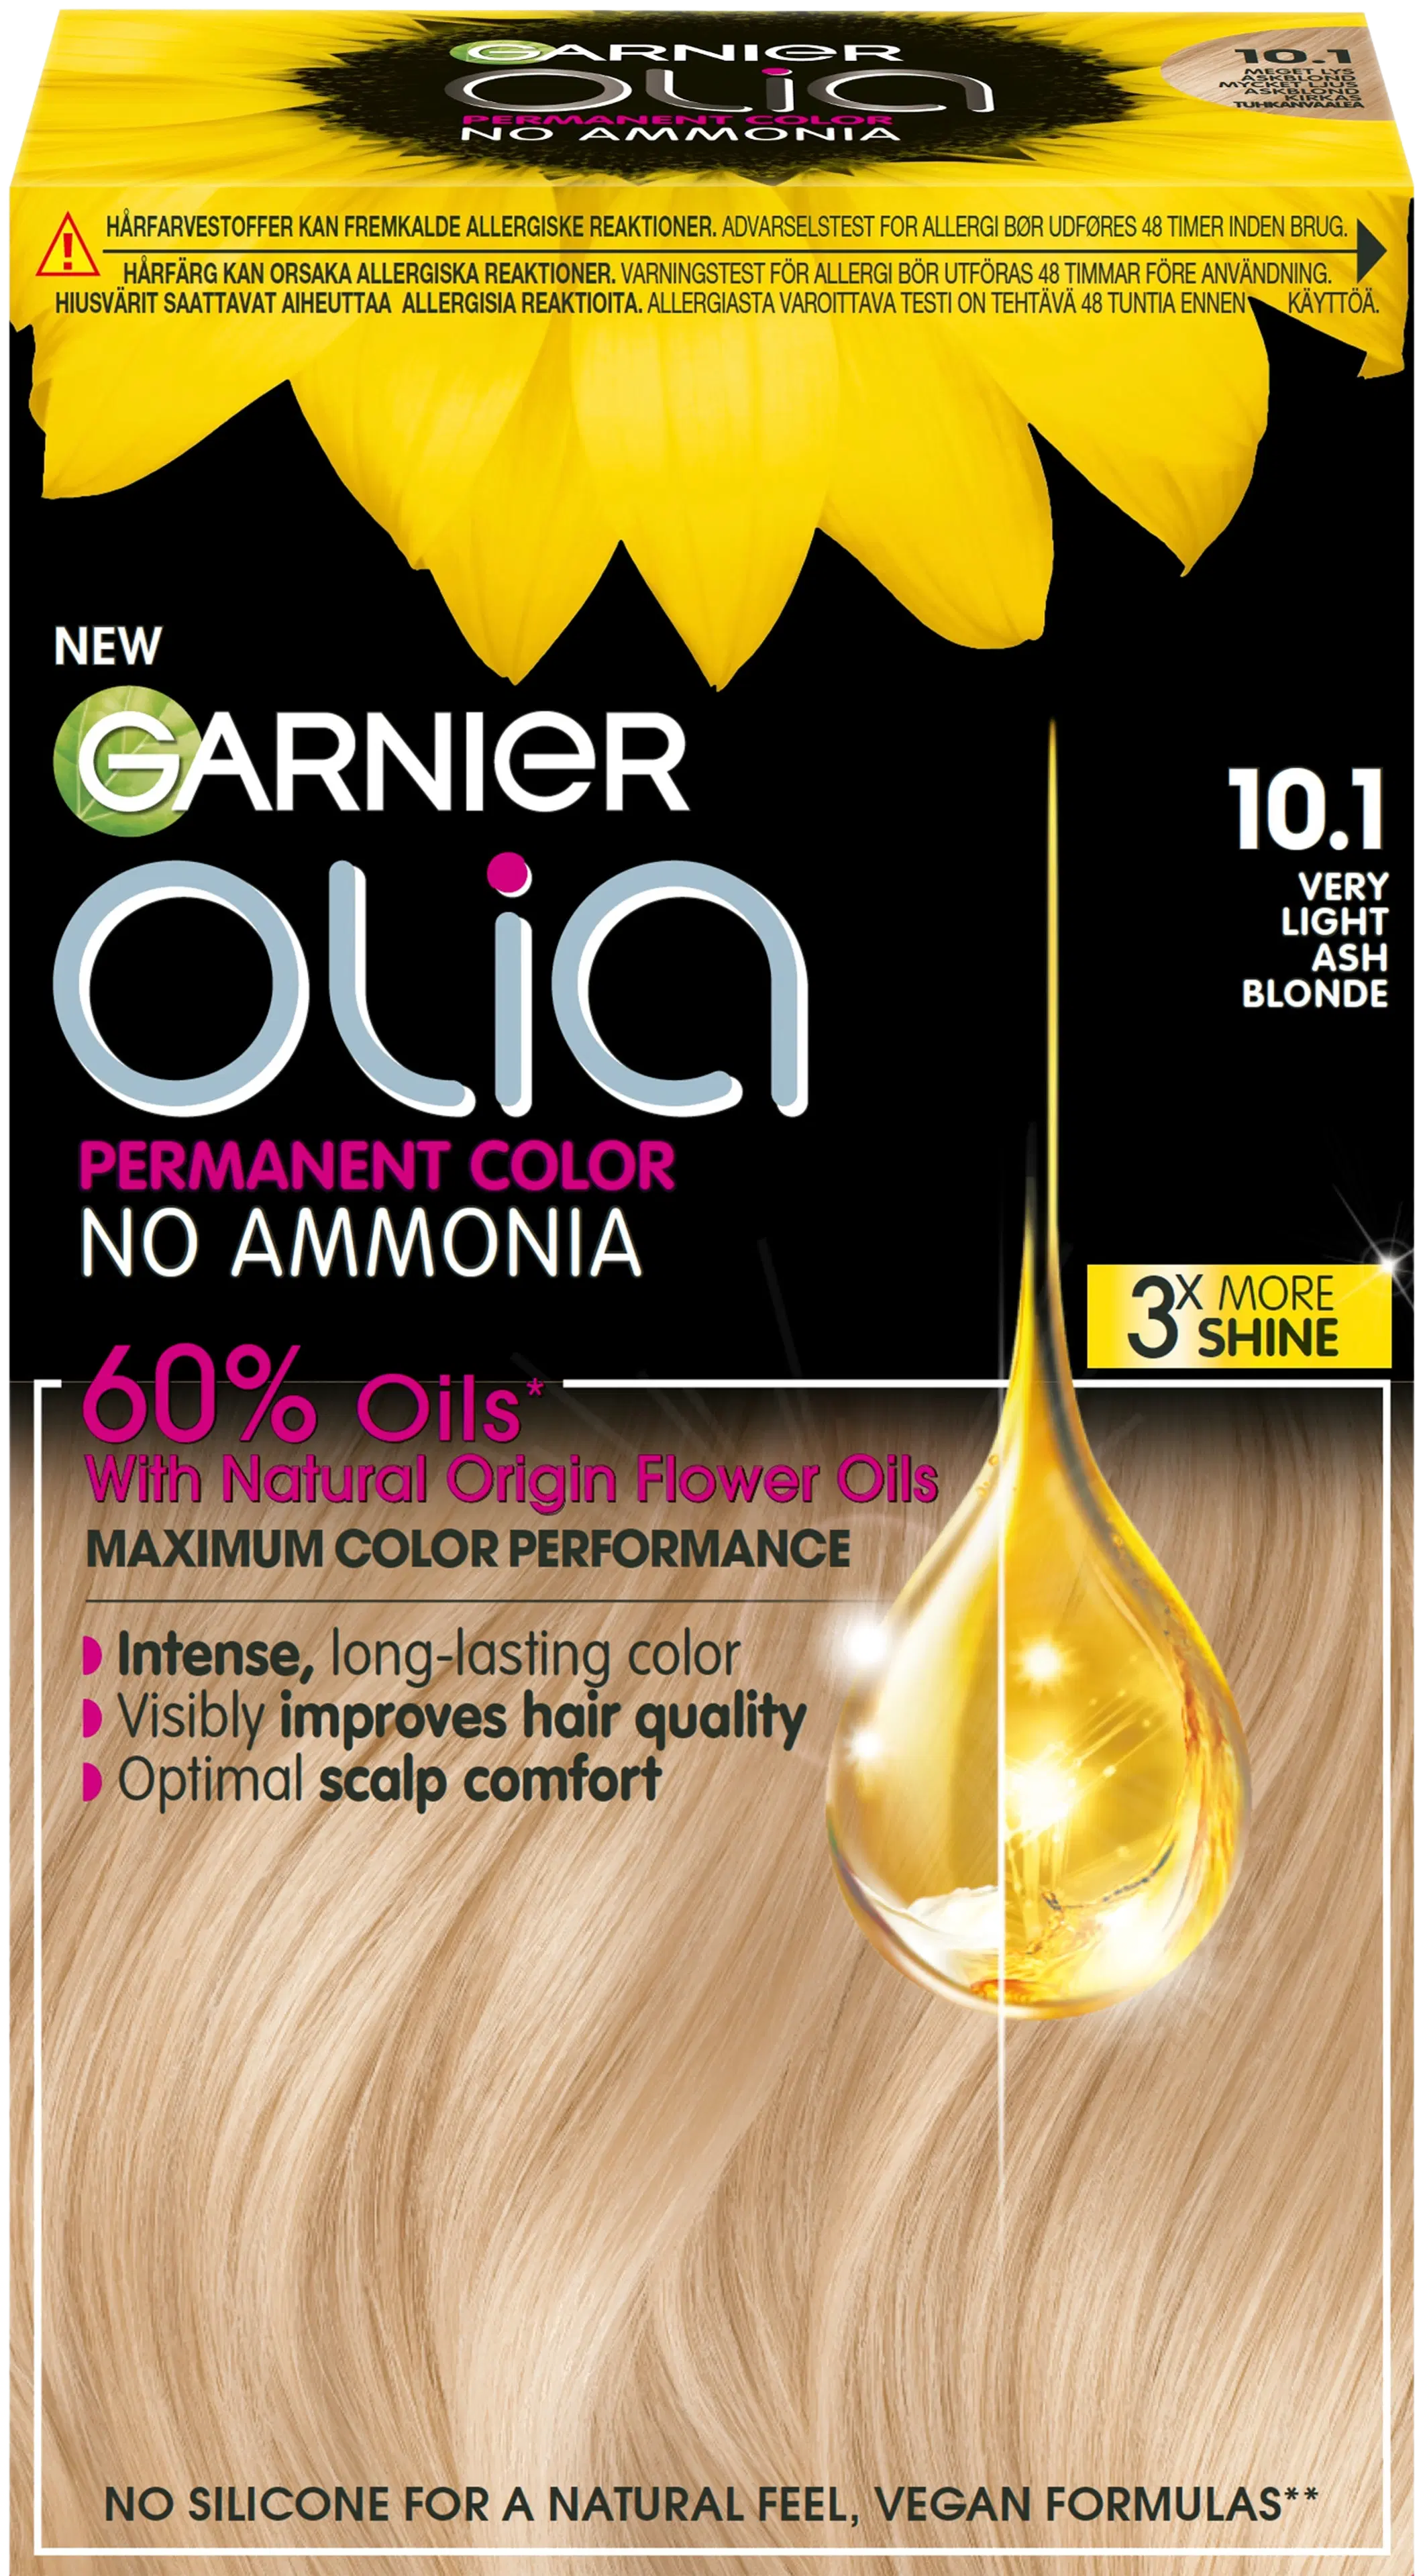 Garnier Olia 10.1 Very Light Ash Blonde kestoväri 174ml